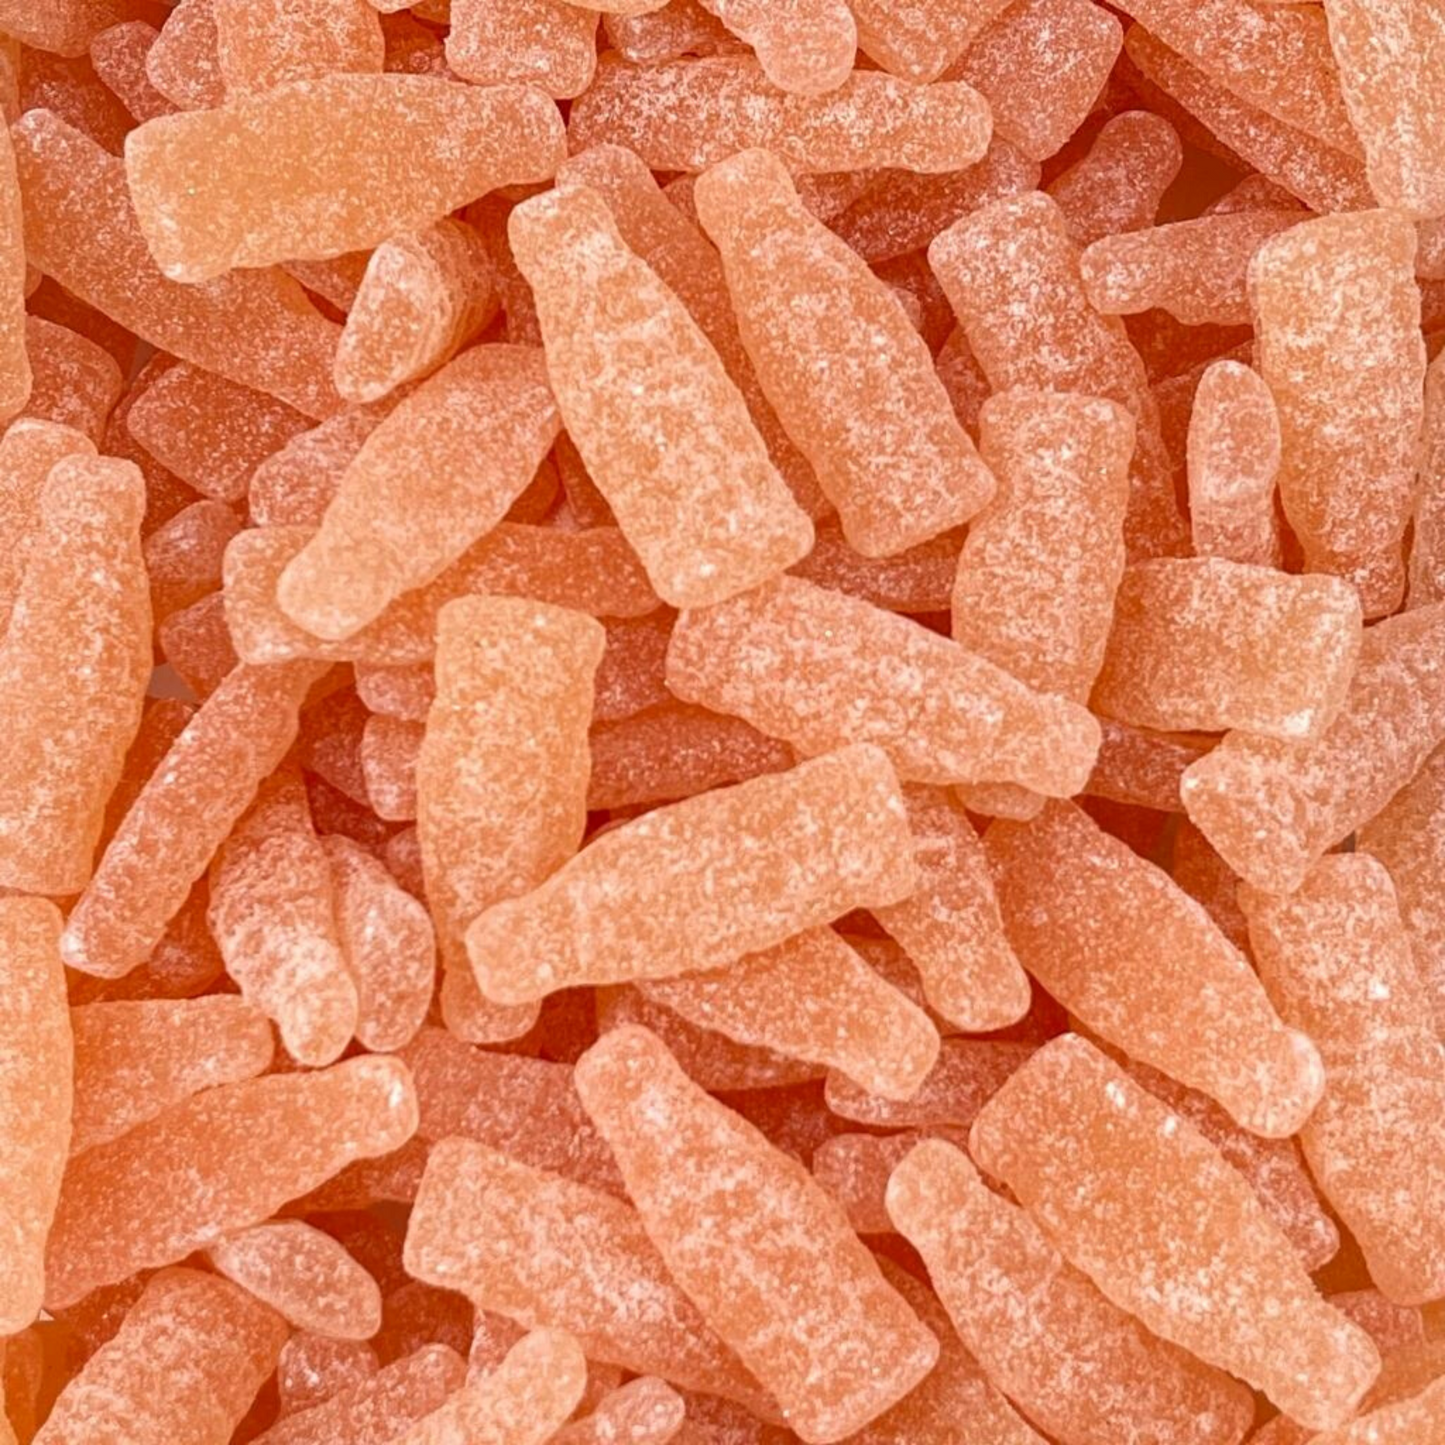 Sour Grapefruit Bottles sockerbit swedish candy